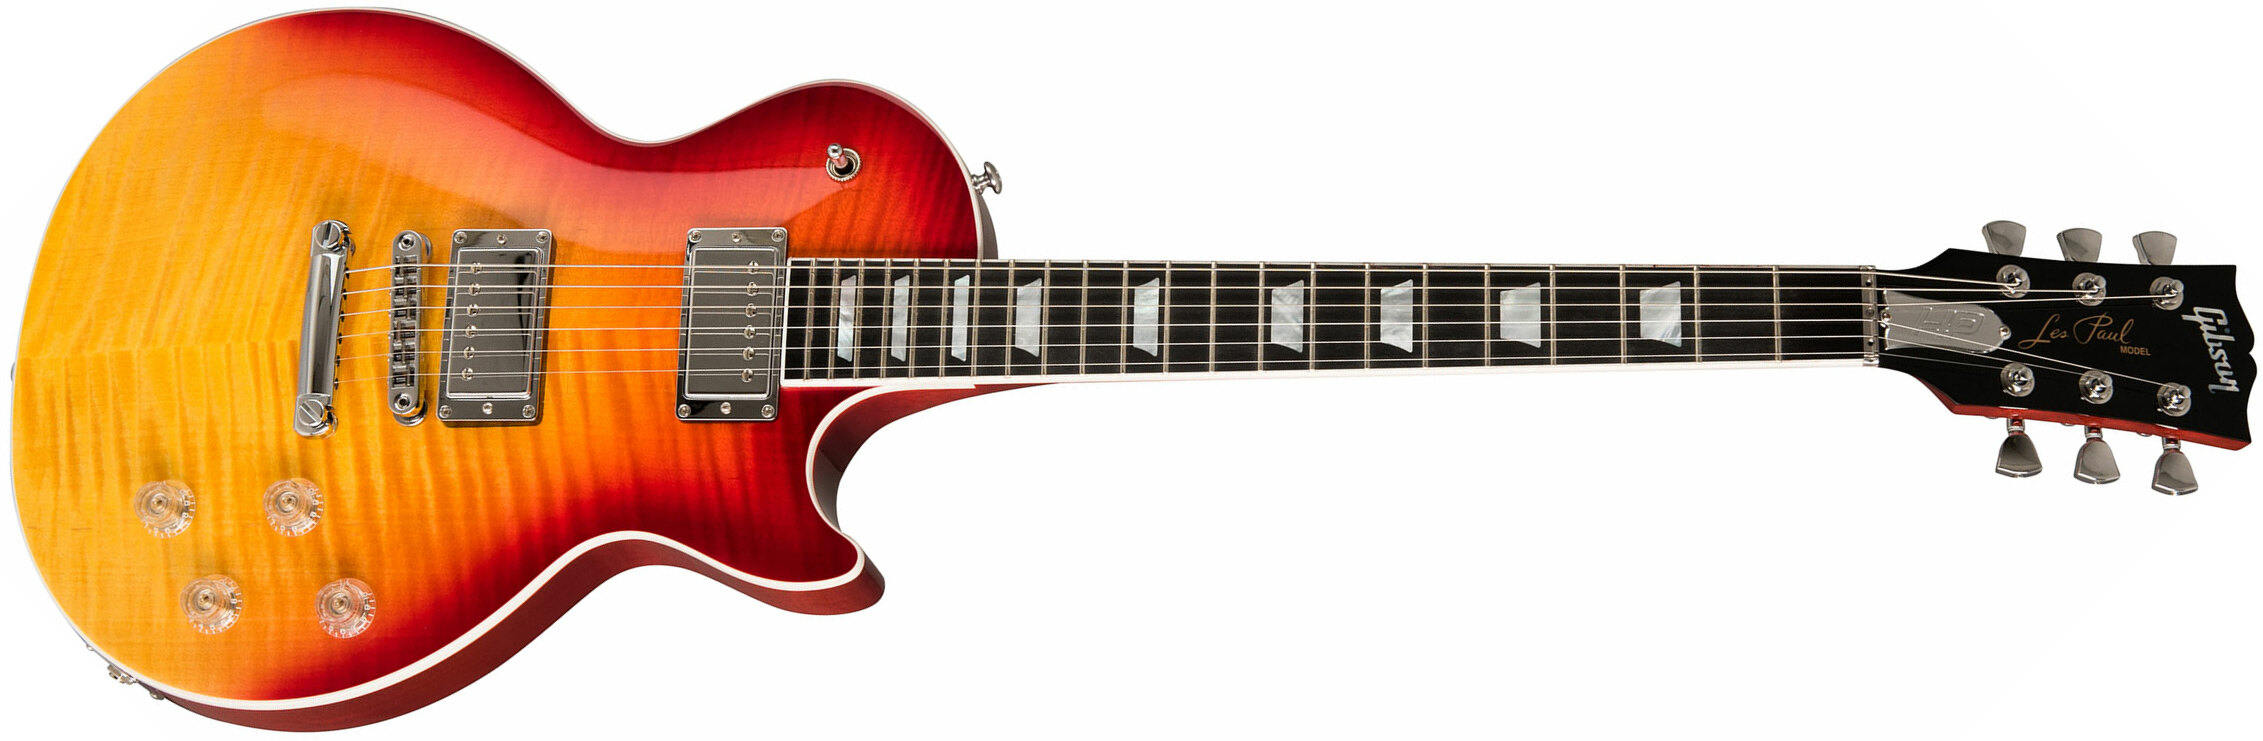 Gibson Les Paul Hp-ii High Performance 2019 2h Ht Ric - Heritage Cherry Fade - Guitarra eléctrica de corte único. - Main picture